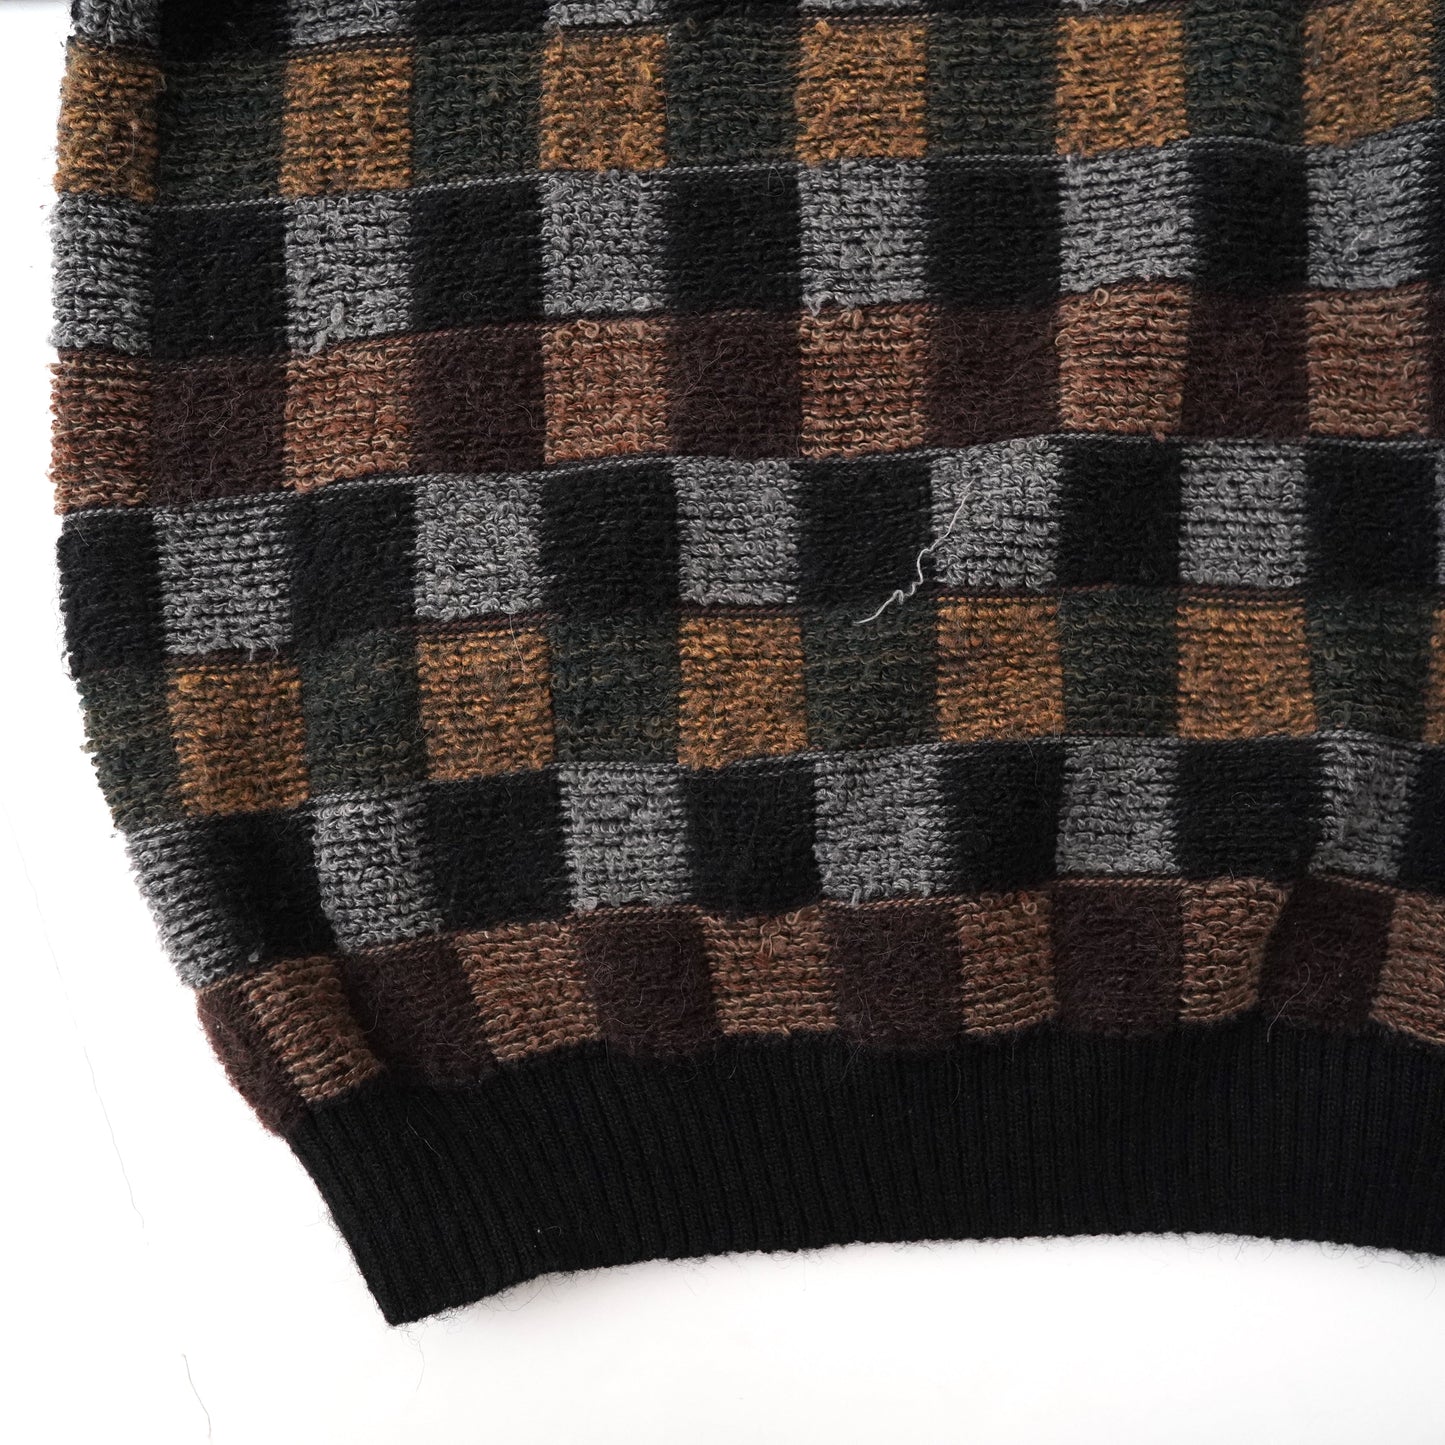 Pattern knit